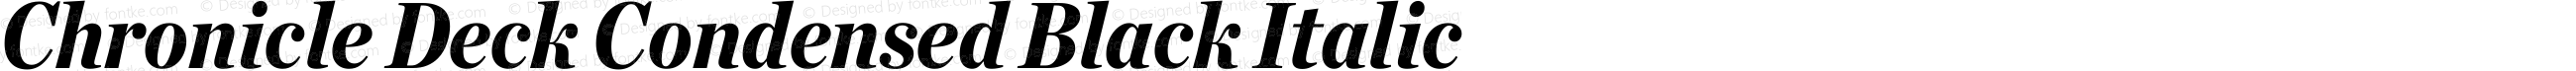 Chronicle Deck Condensed Black Italic